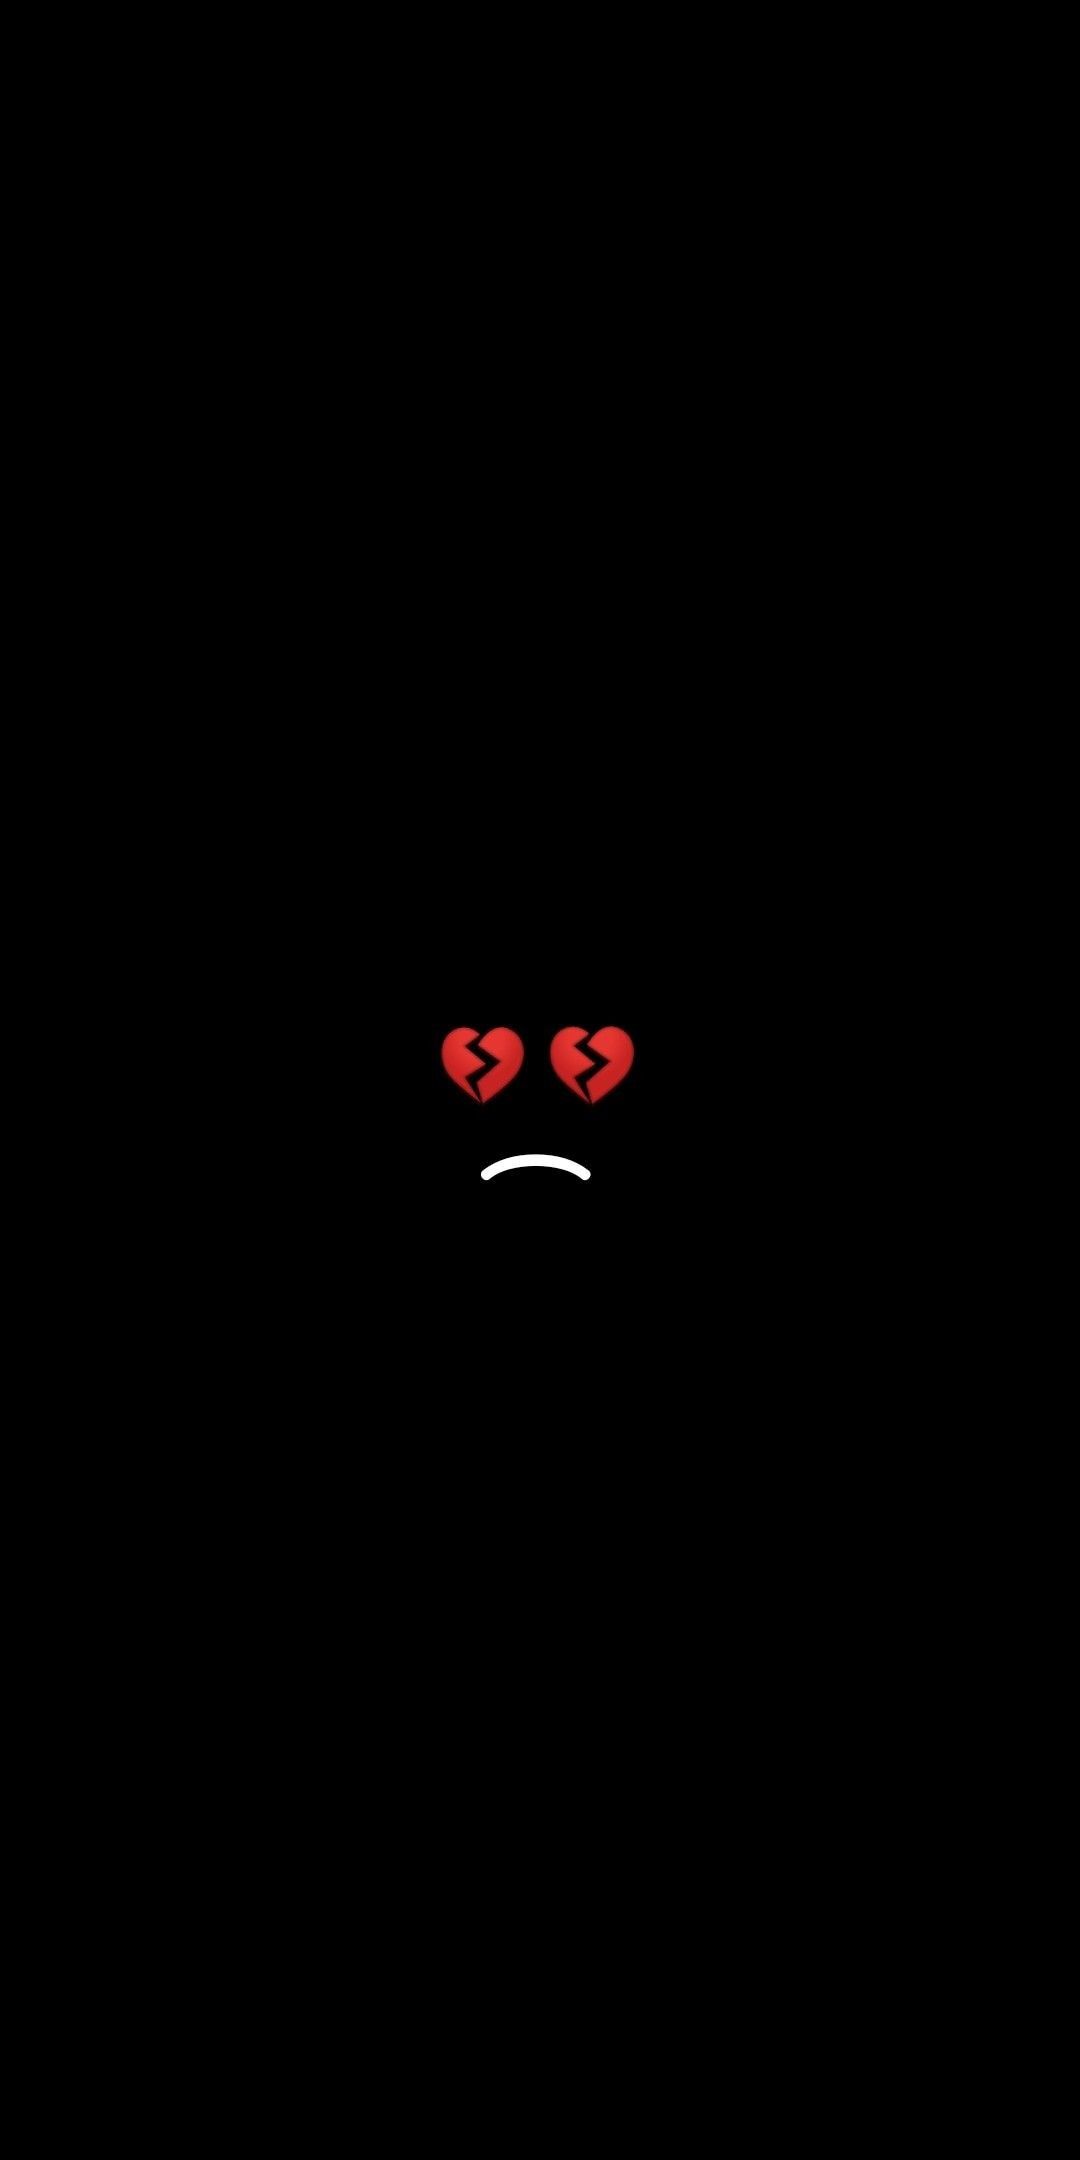 Sad emoji wallpaper updated their  Sad emoji wallpaper  Facebook